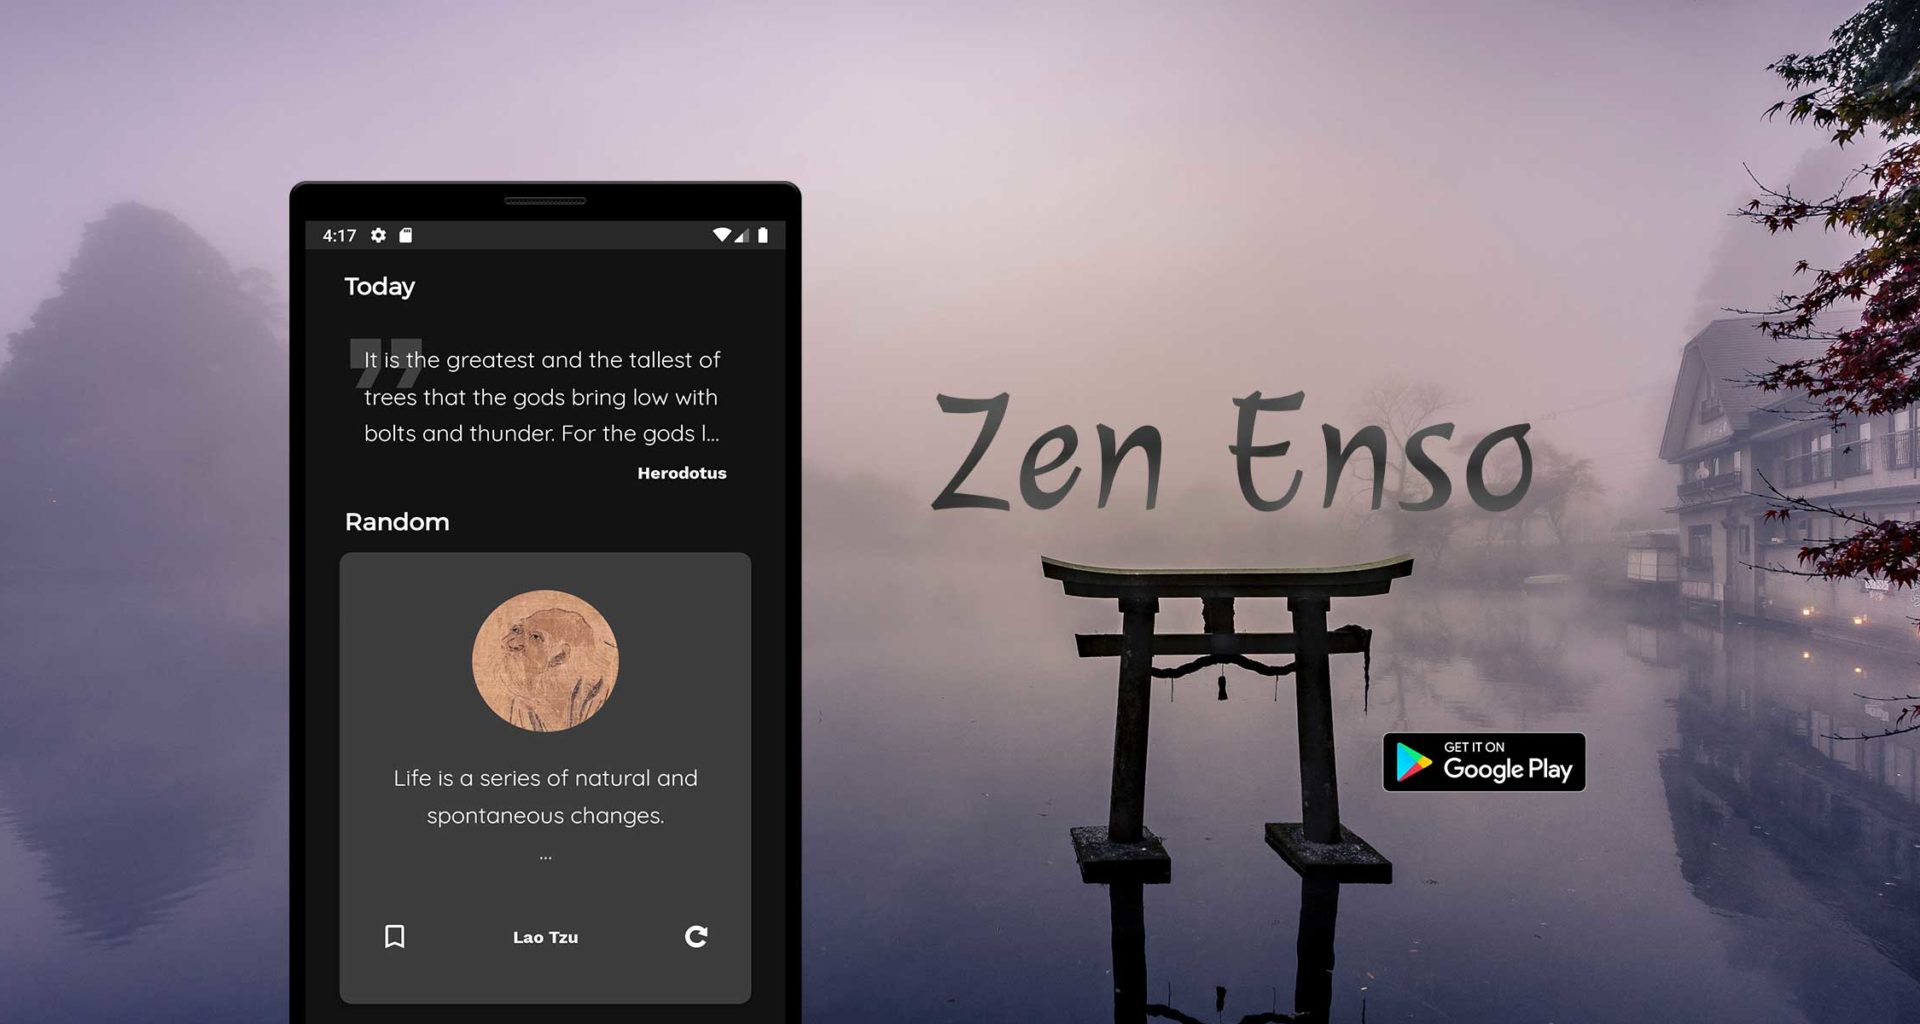 Zen Enso app promo banner